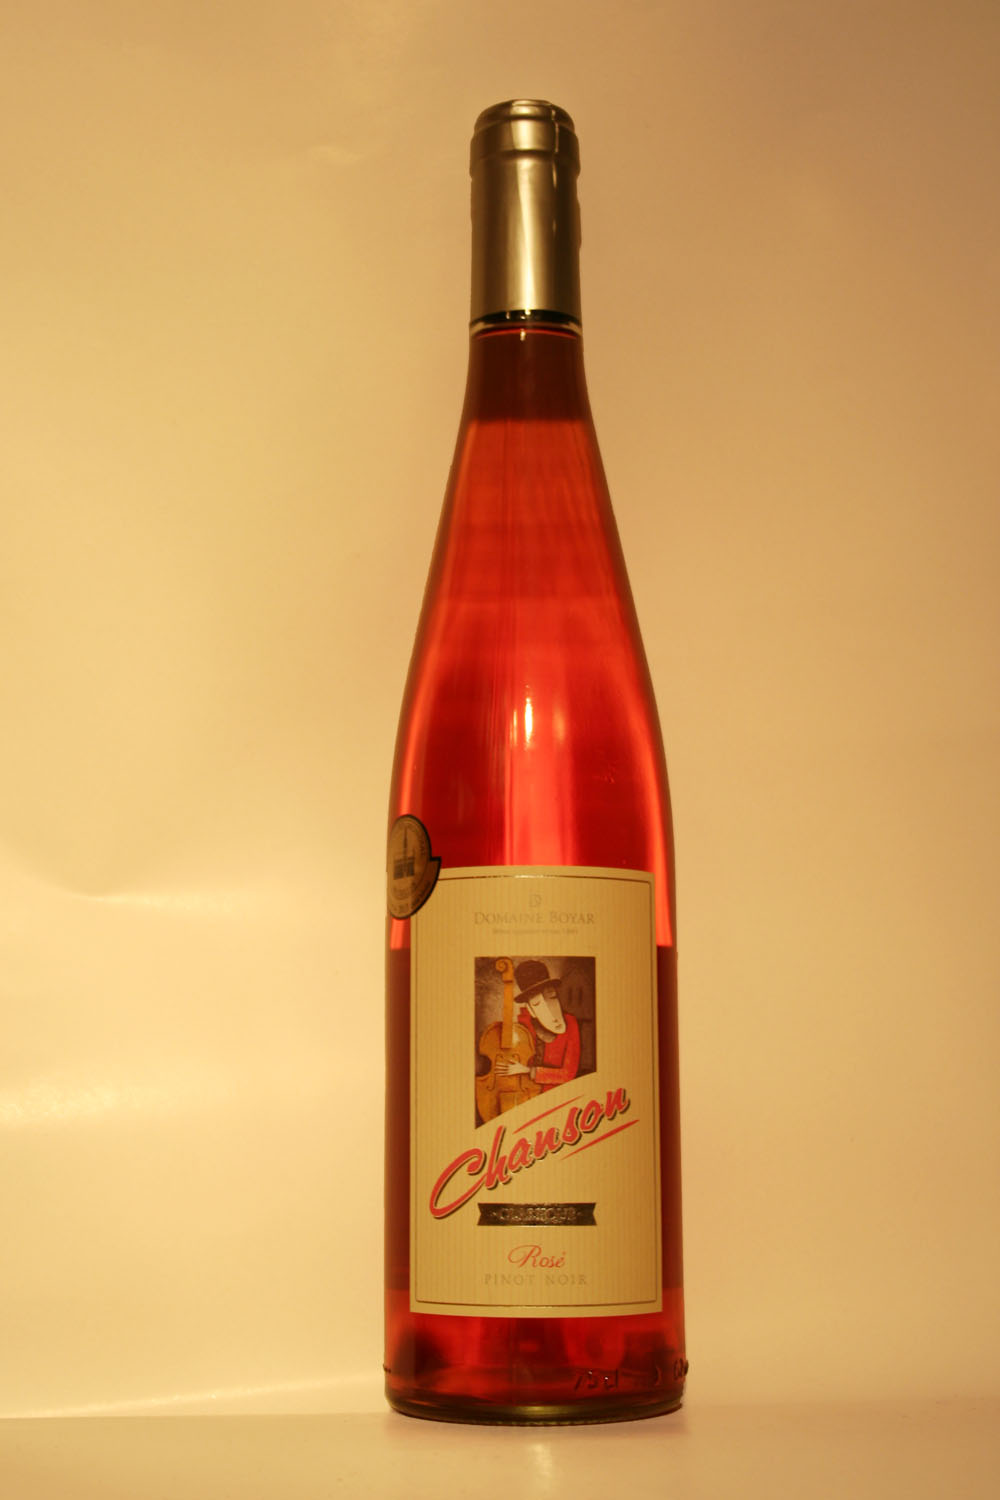 Chanson Rose Pinot Noir 2012